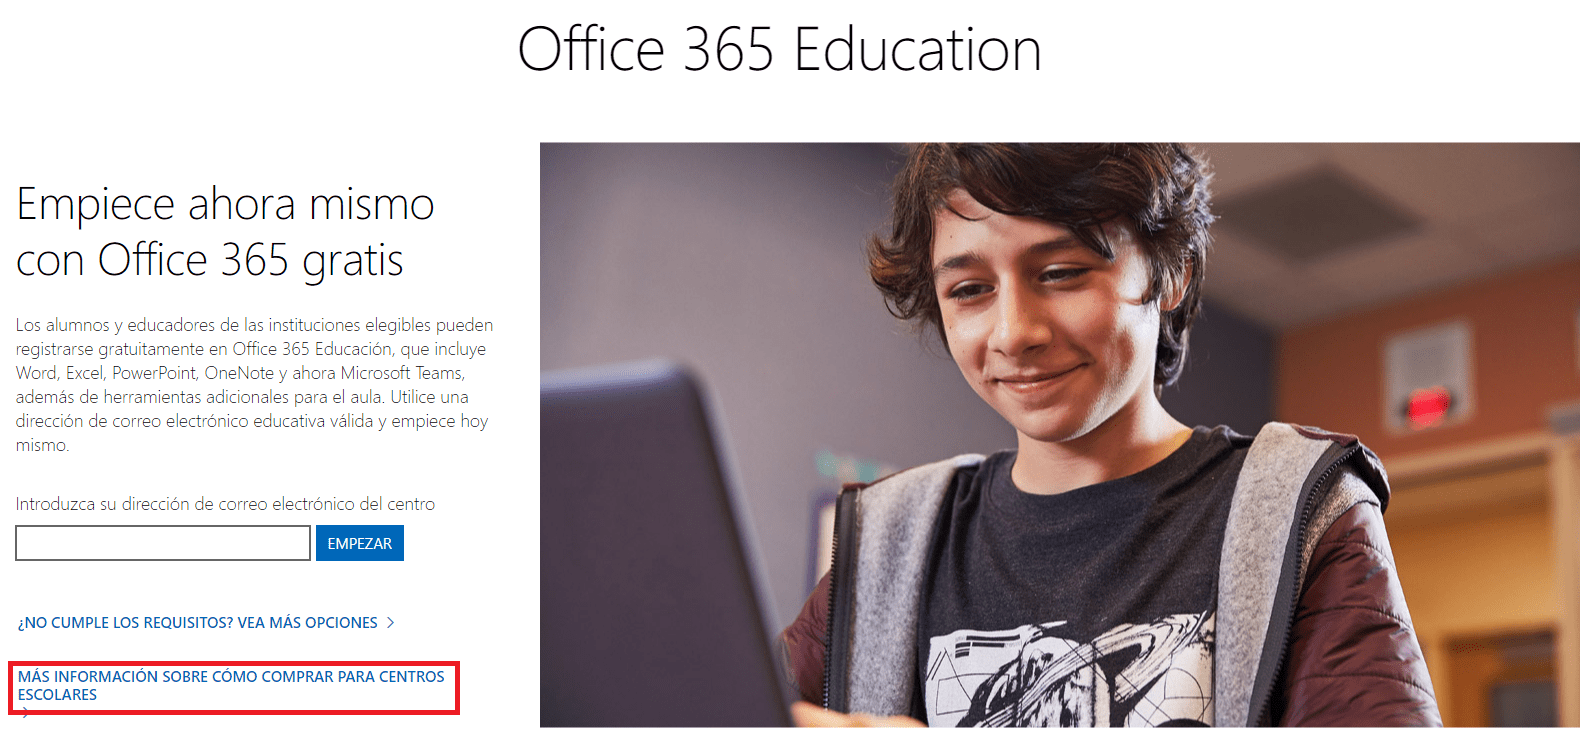 Office 365 A1 y Onedrive 5TB gratis durante 6 meses - islaBit